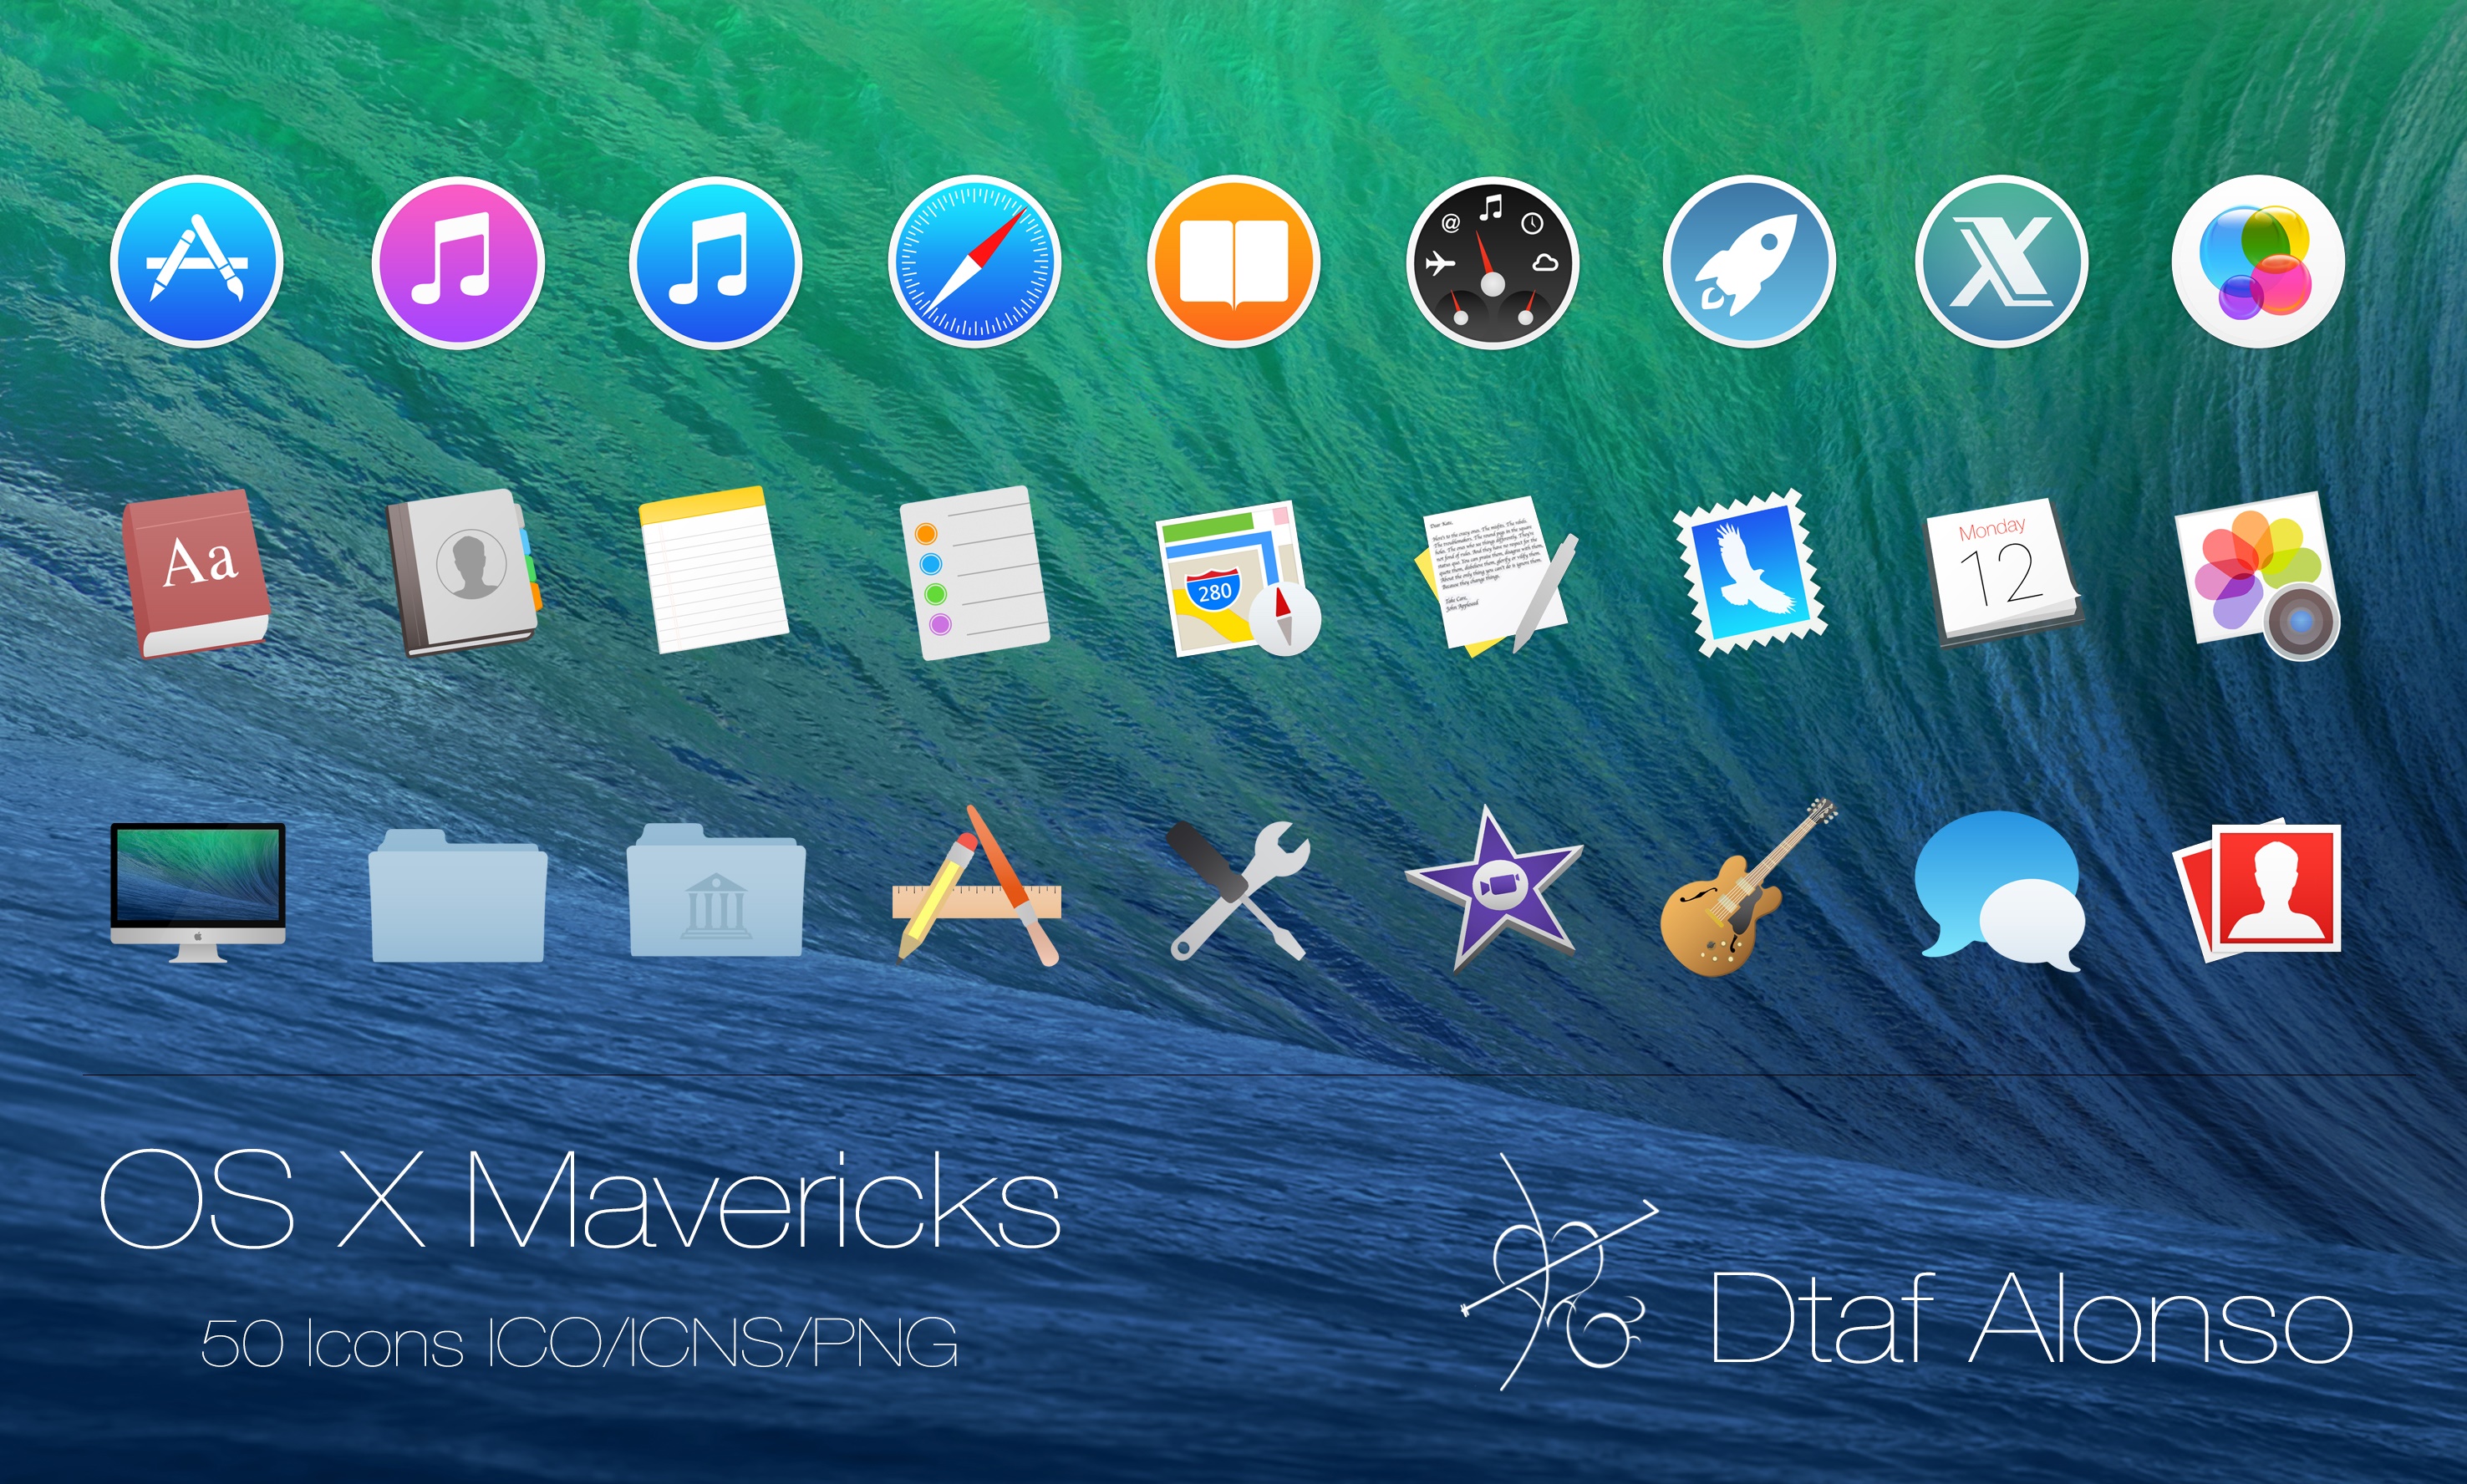 rocketdock icon mac